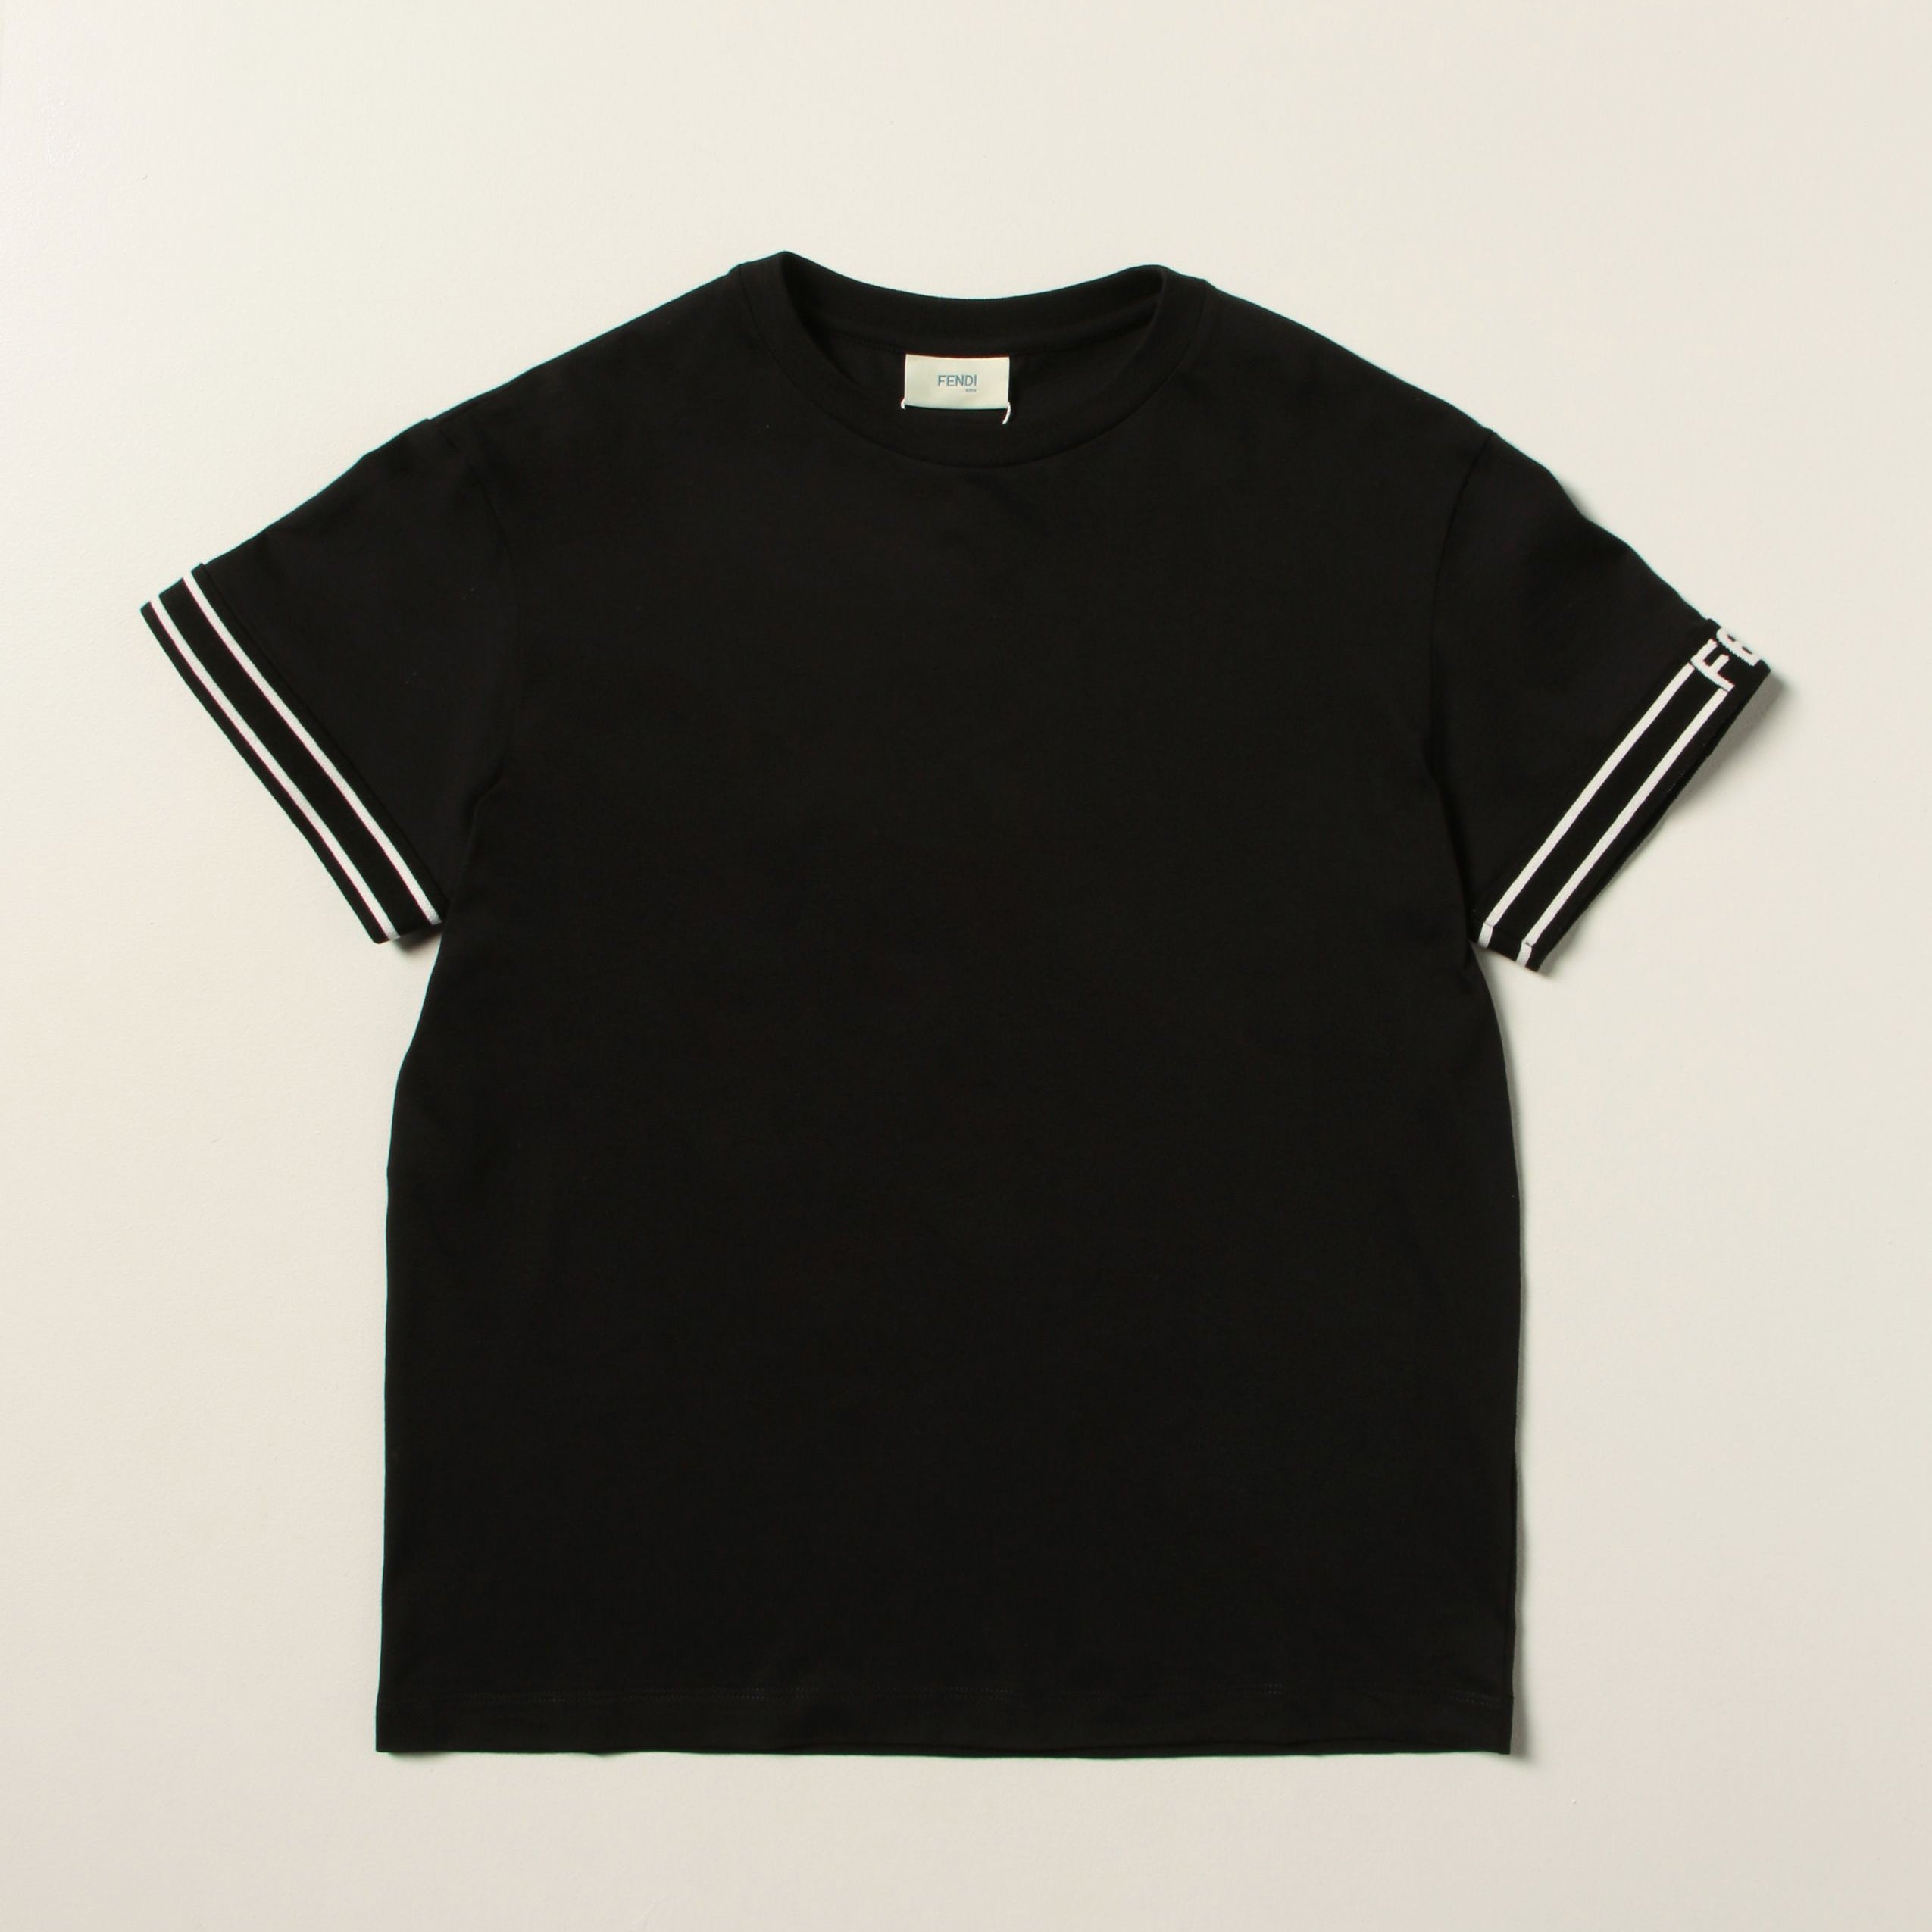 Boys Black Cotton T-Shirt